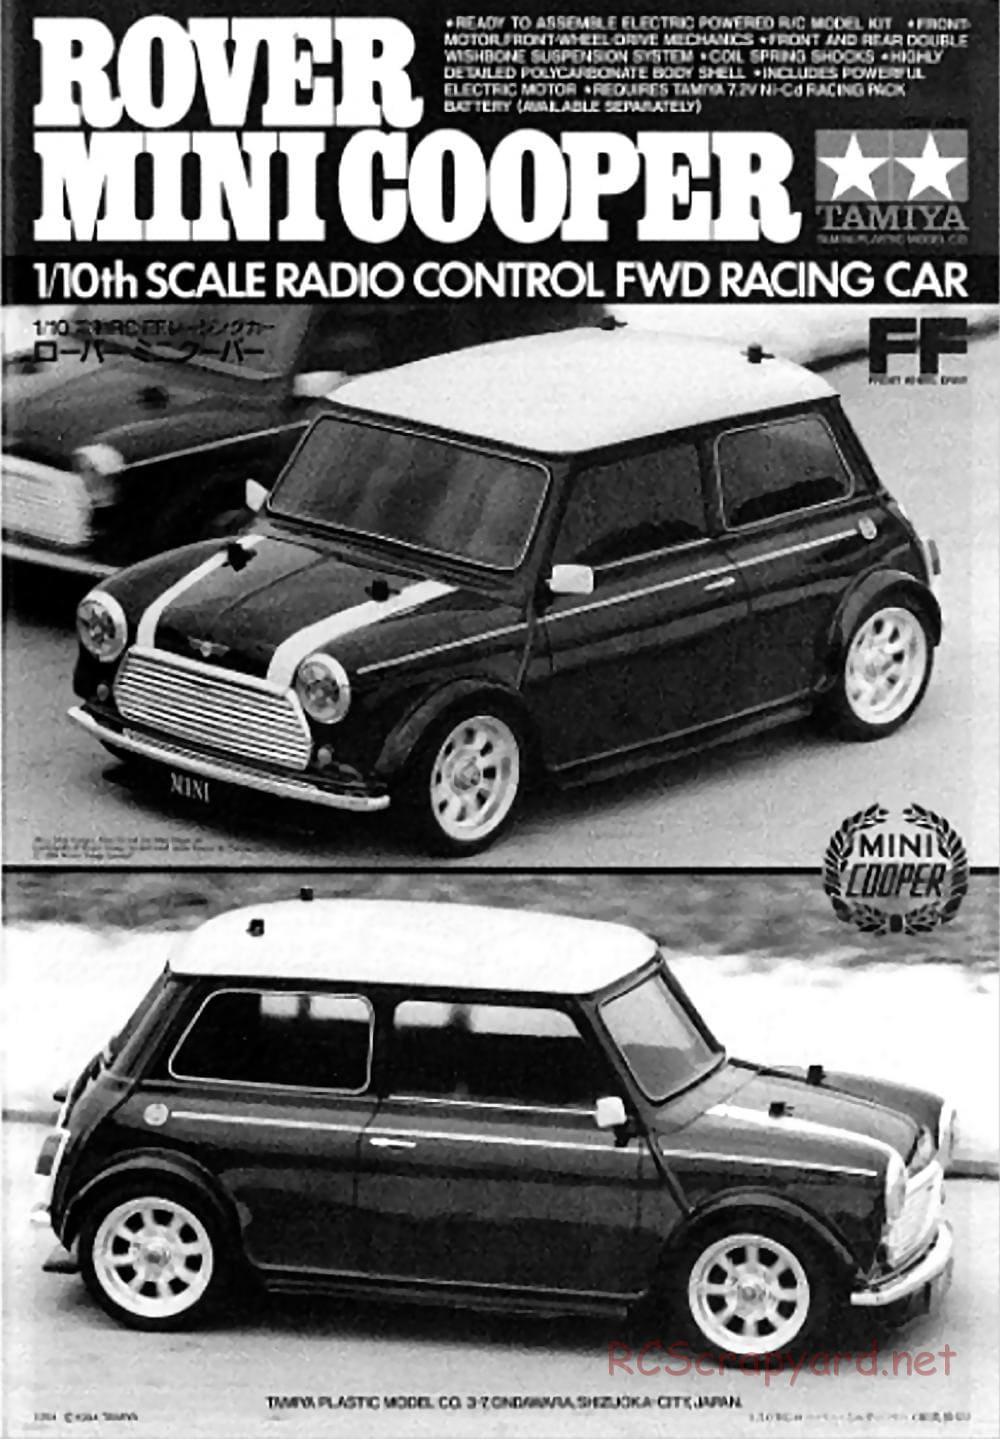 Tamiya - Rover Mini Cooper - M01 Chassis - Manual - Page 1